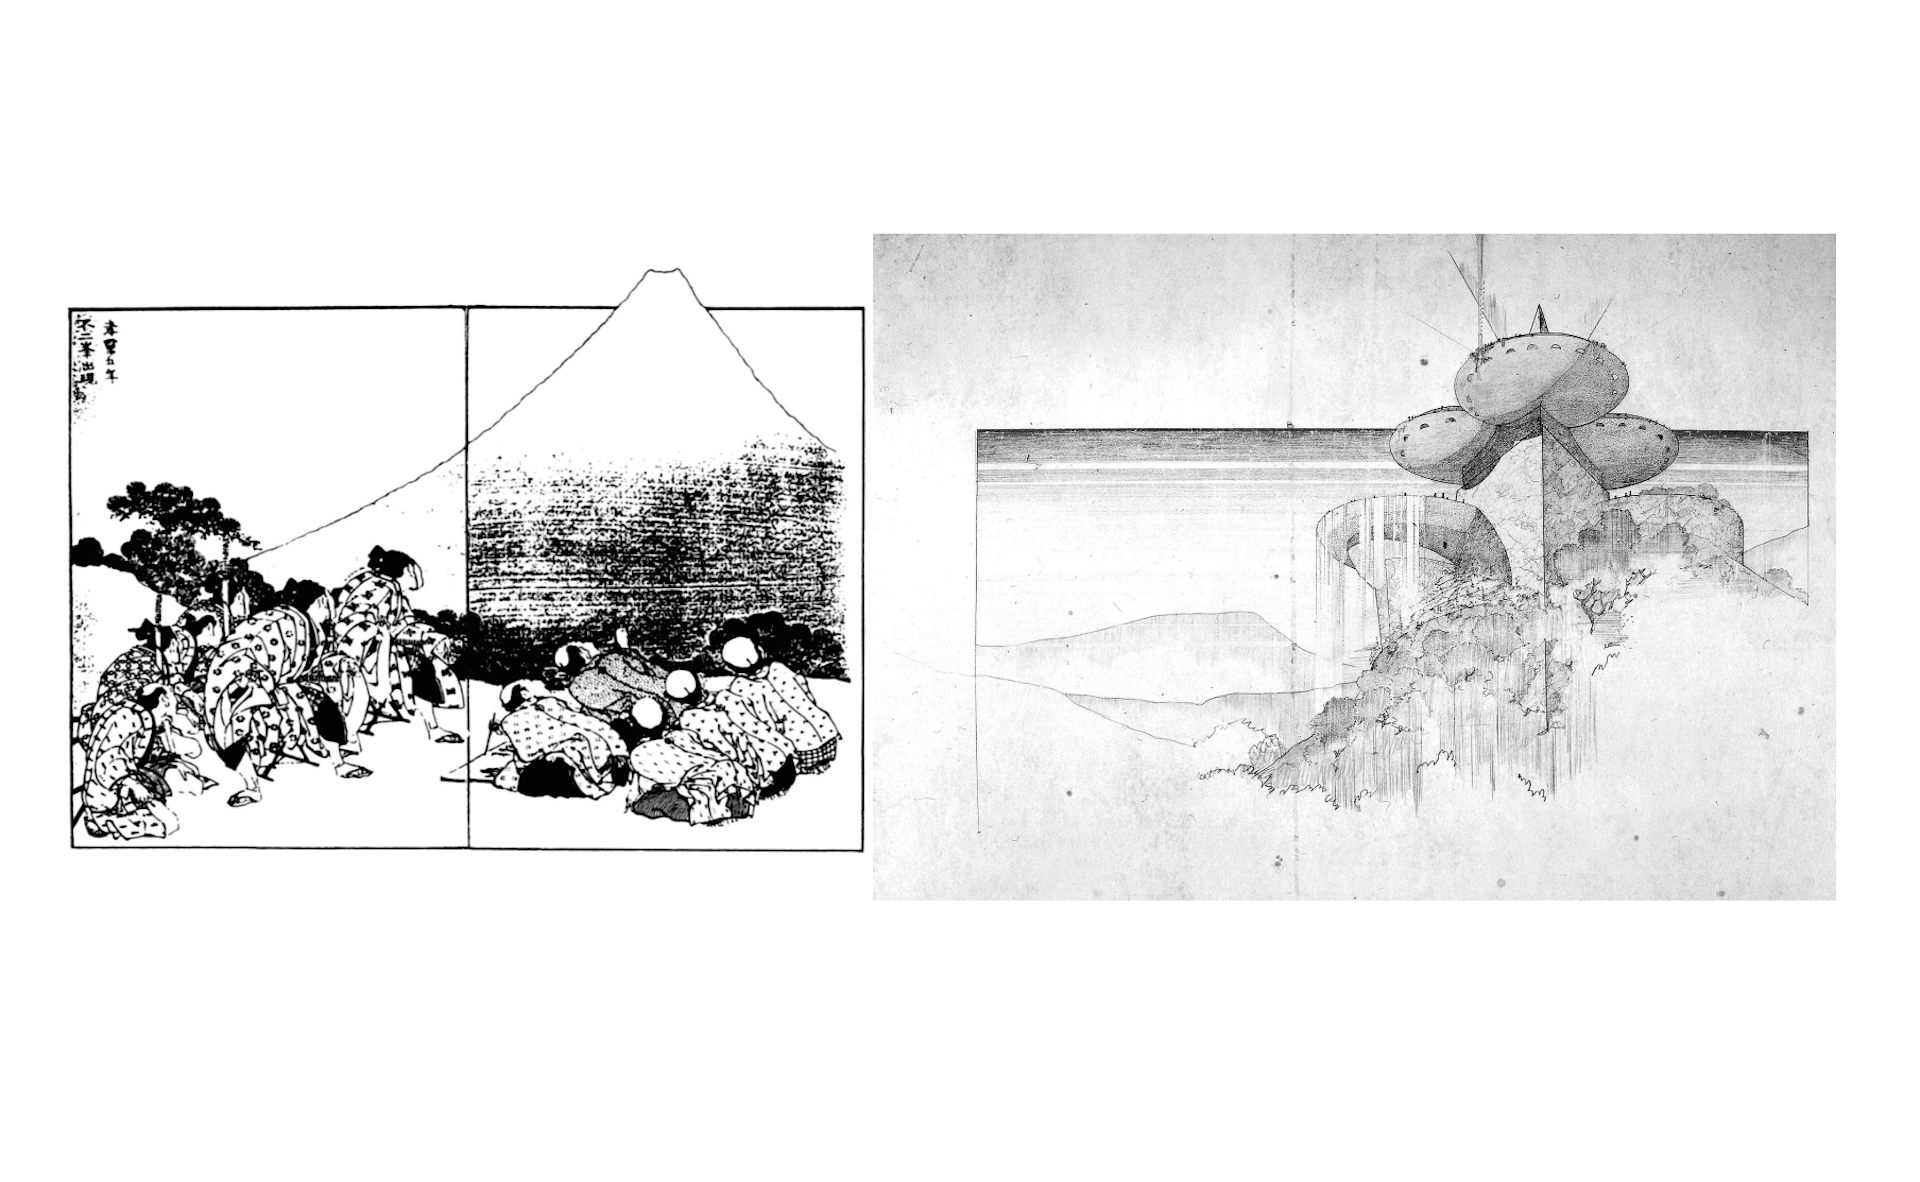 Frank Lloyd Wright's Japanese education